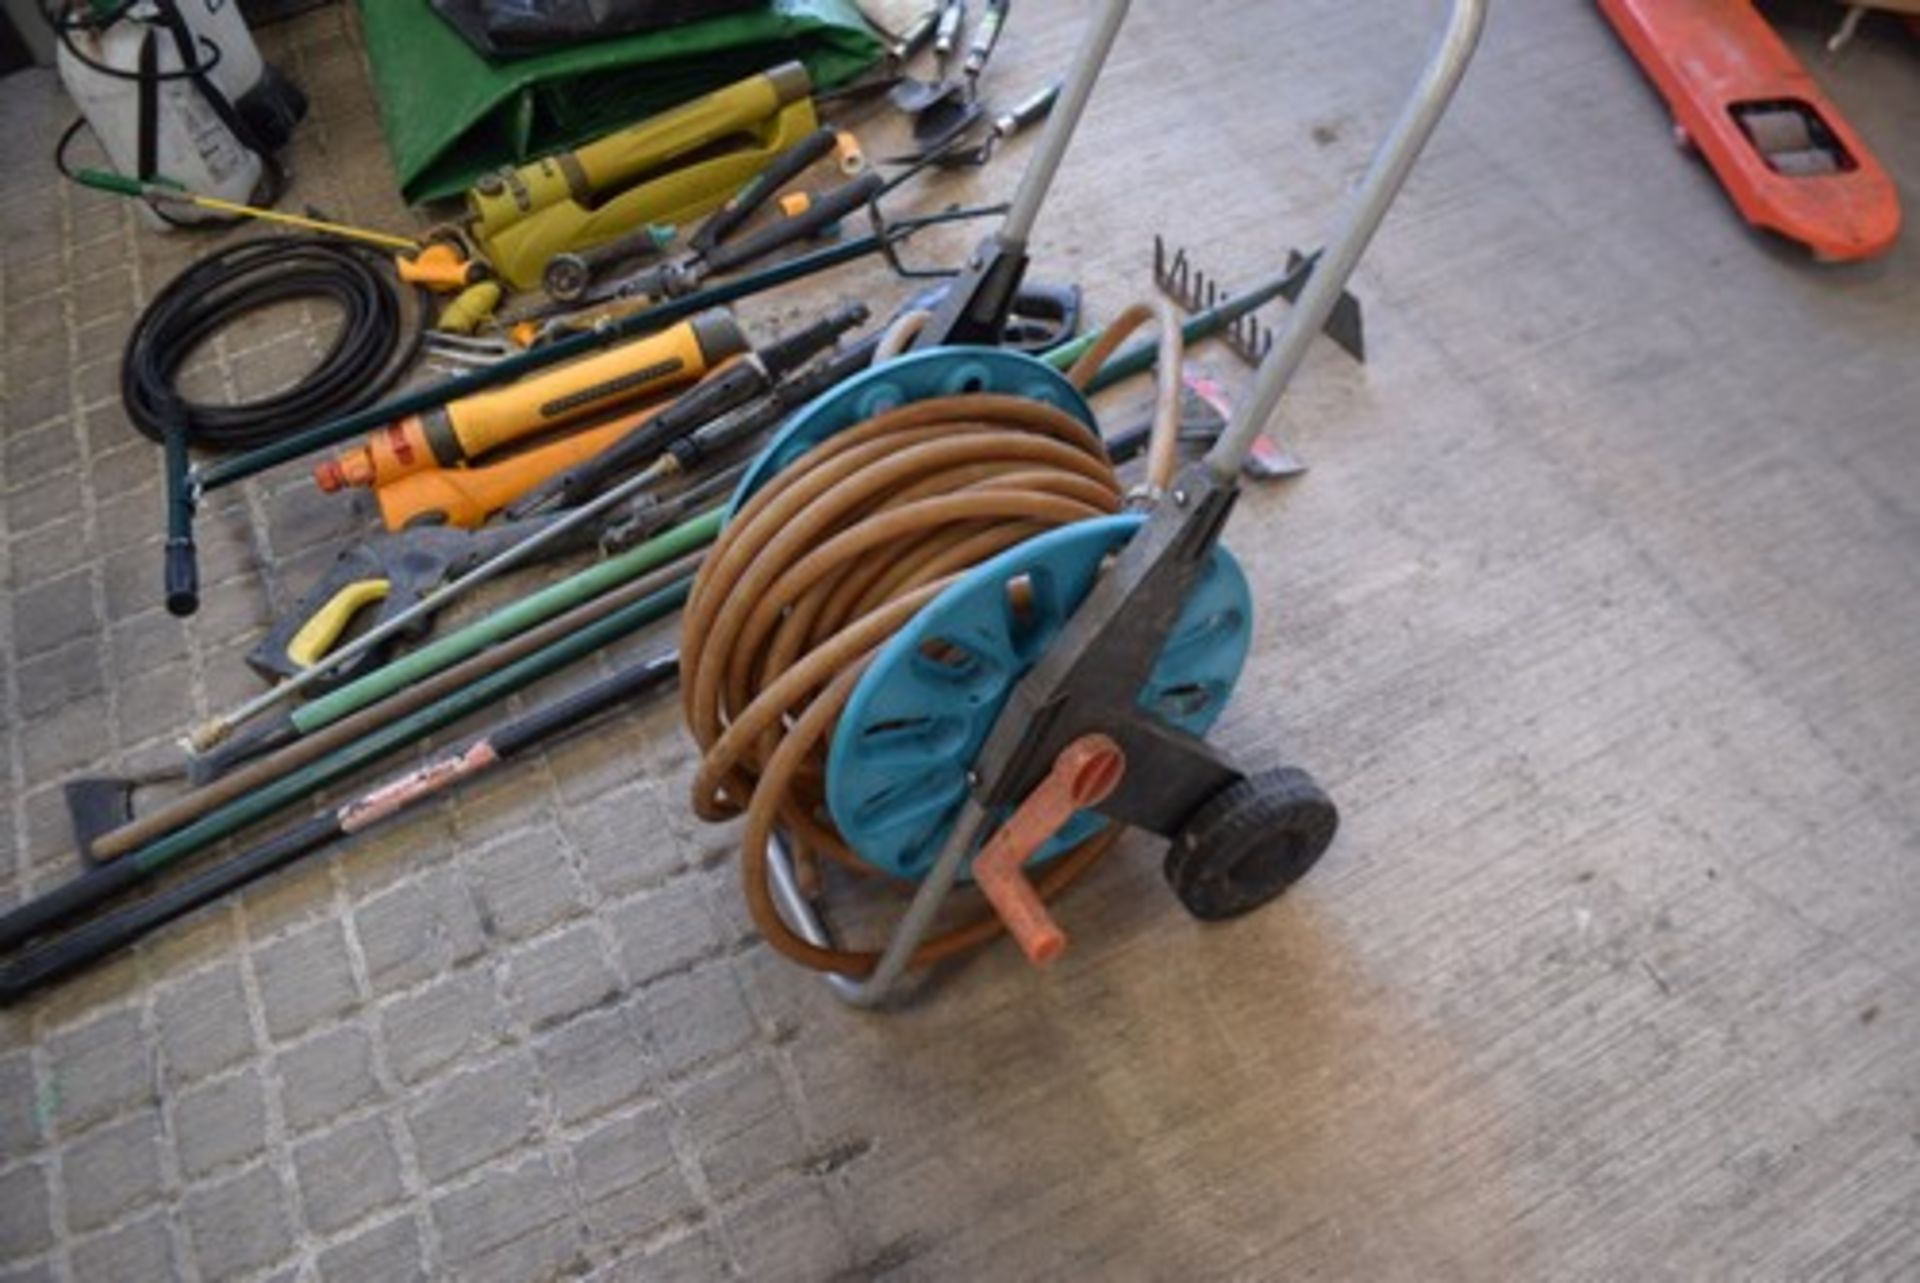 Assorted gardening items, including spray tanks, garden sprays, hose pipe, assorted hand tools - - Image 2 of 7